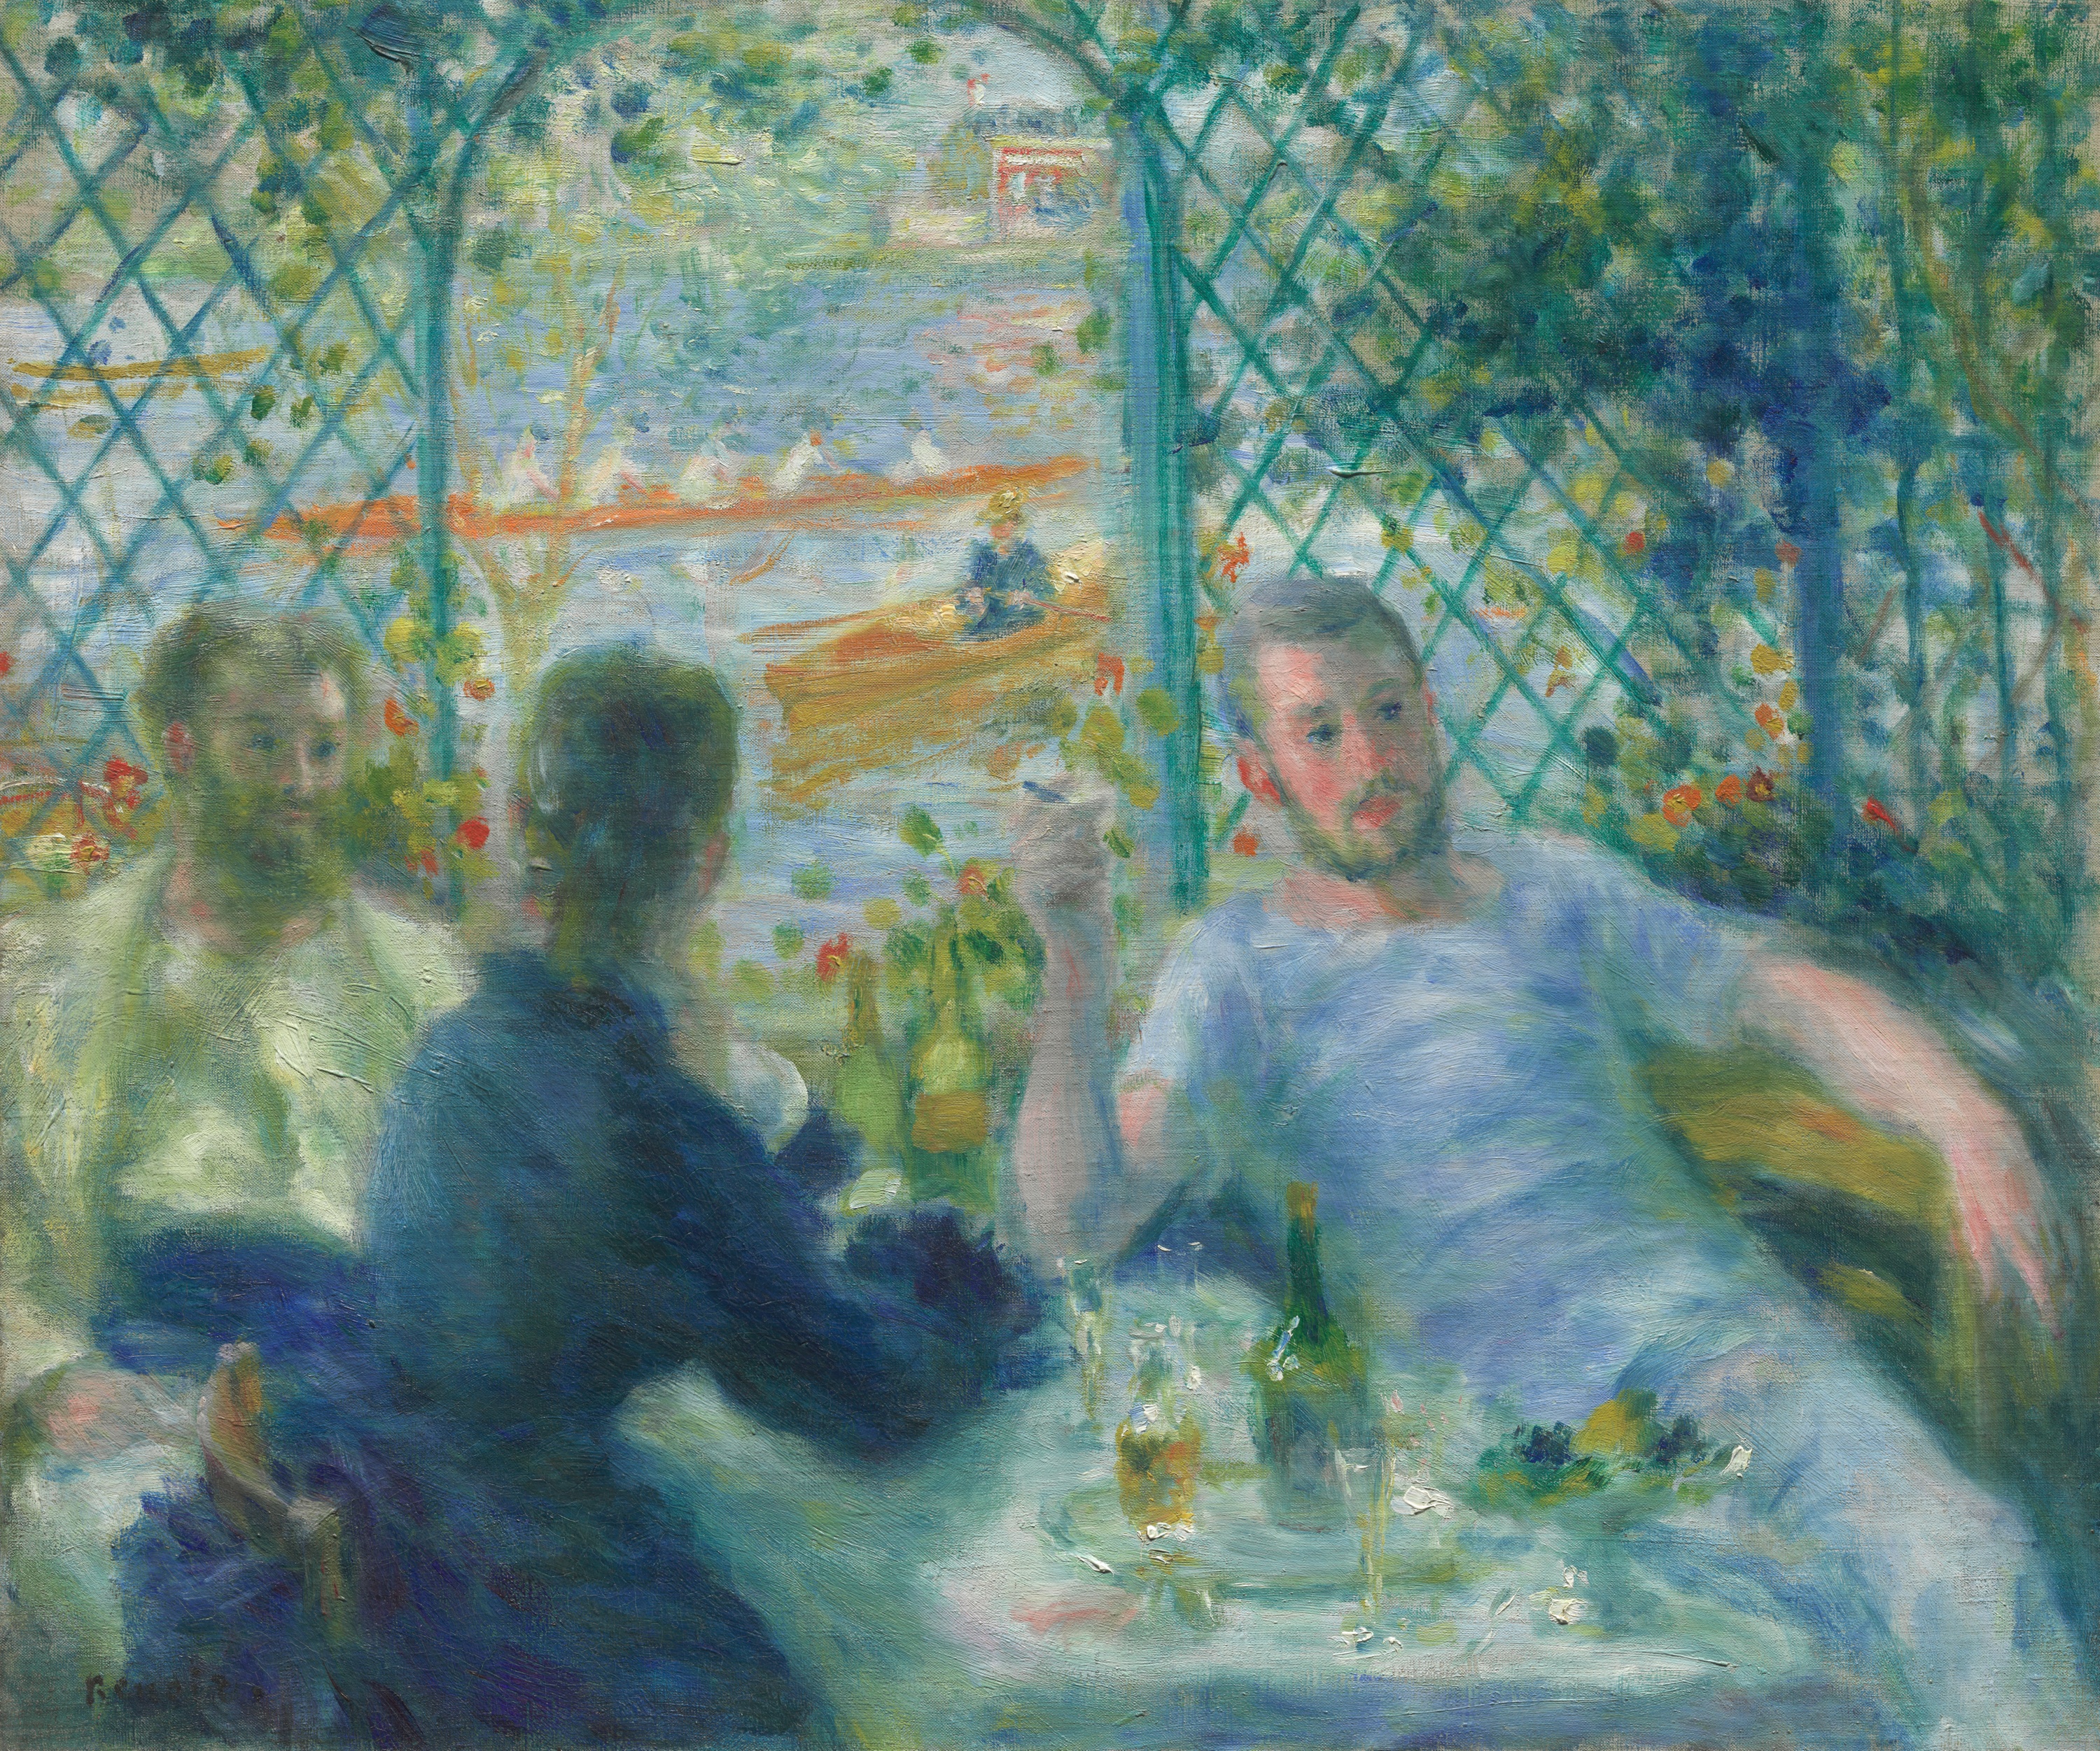 Almoço no Restaurante Fournaise by Pierre-Auguste Renoir - 1875 - 55 × 65.9 cm Art Institute of Chicago